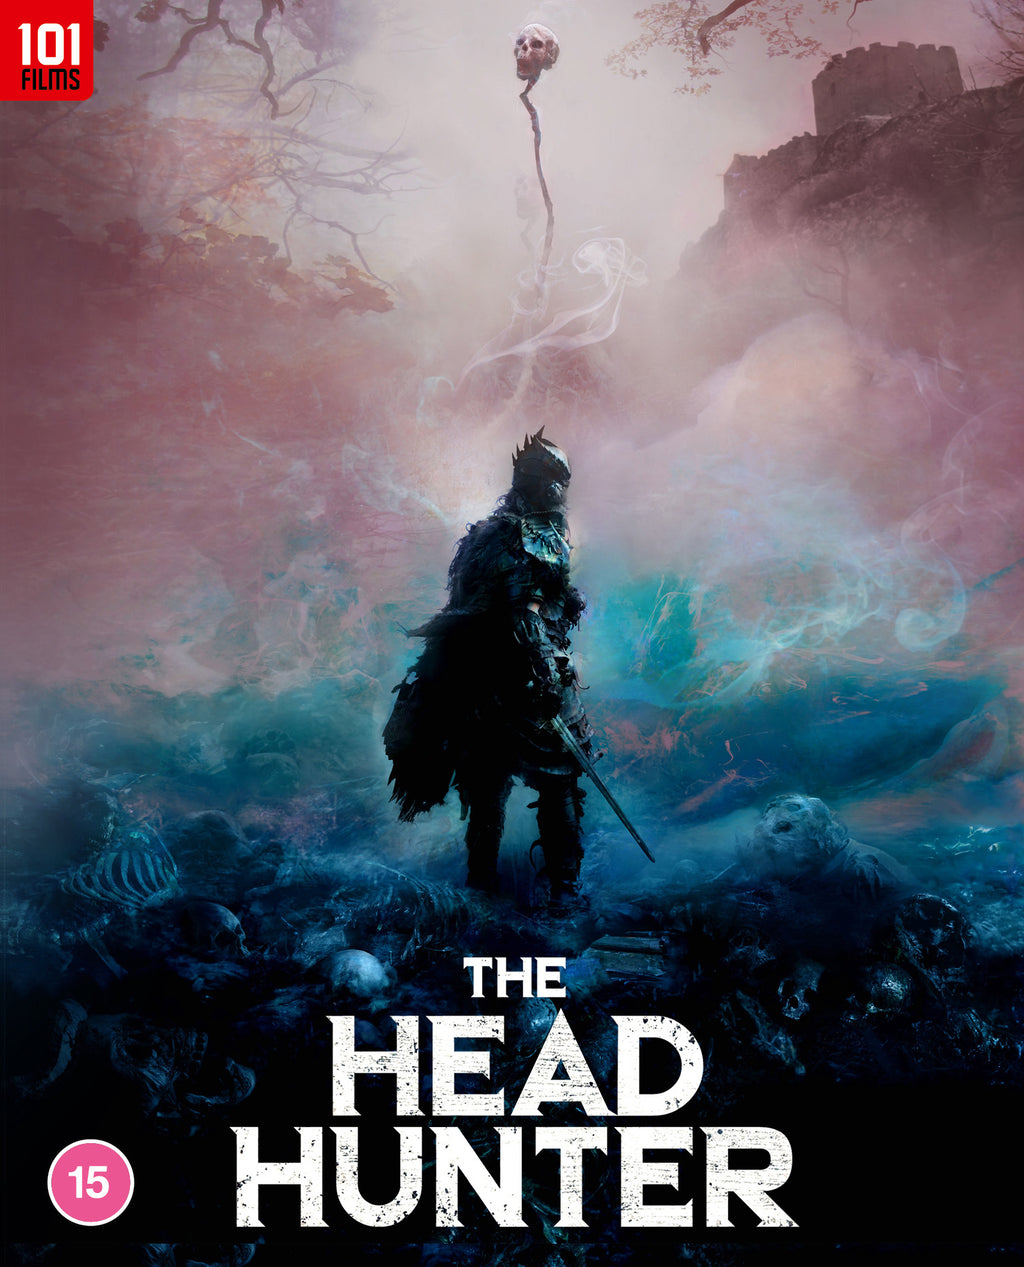 The Head Hunter (2018) (Blu-ray)